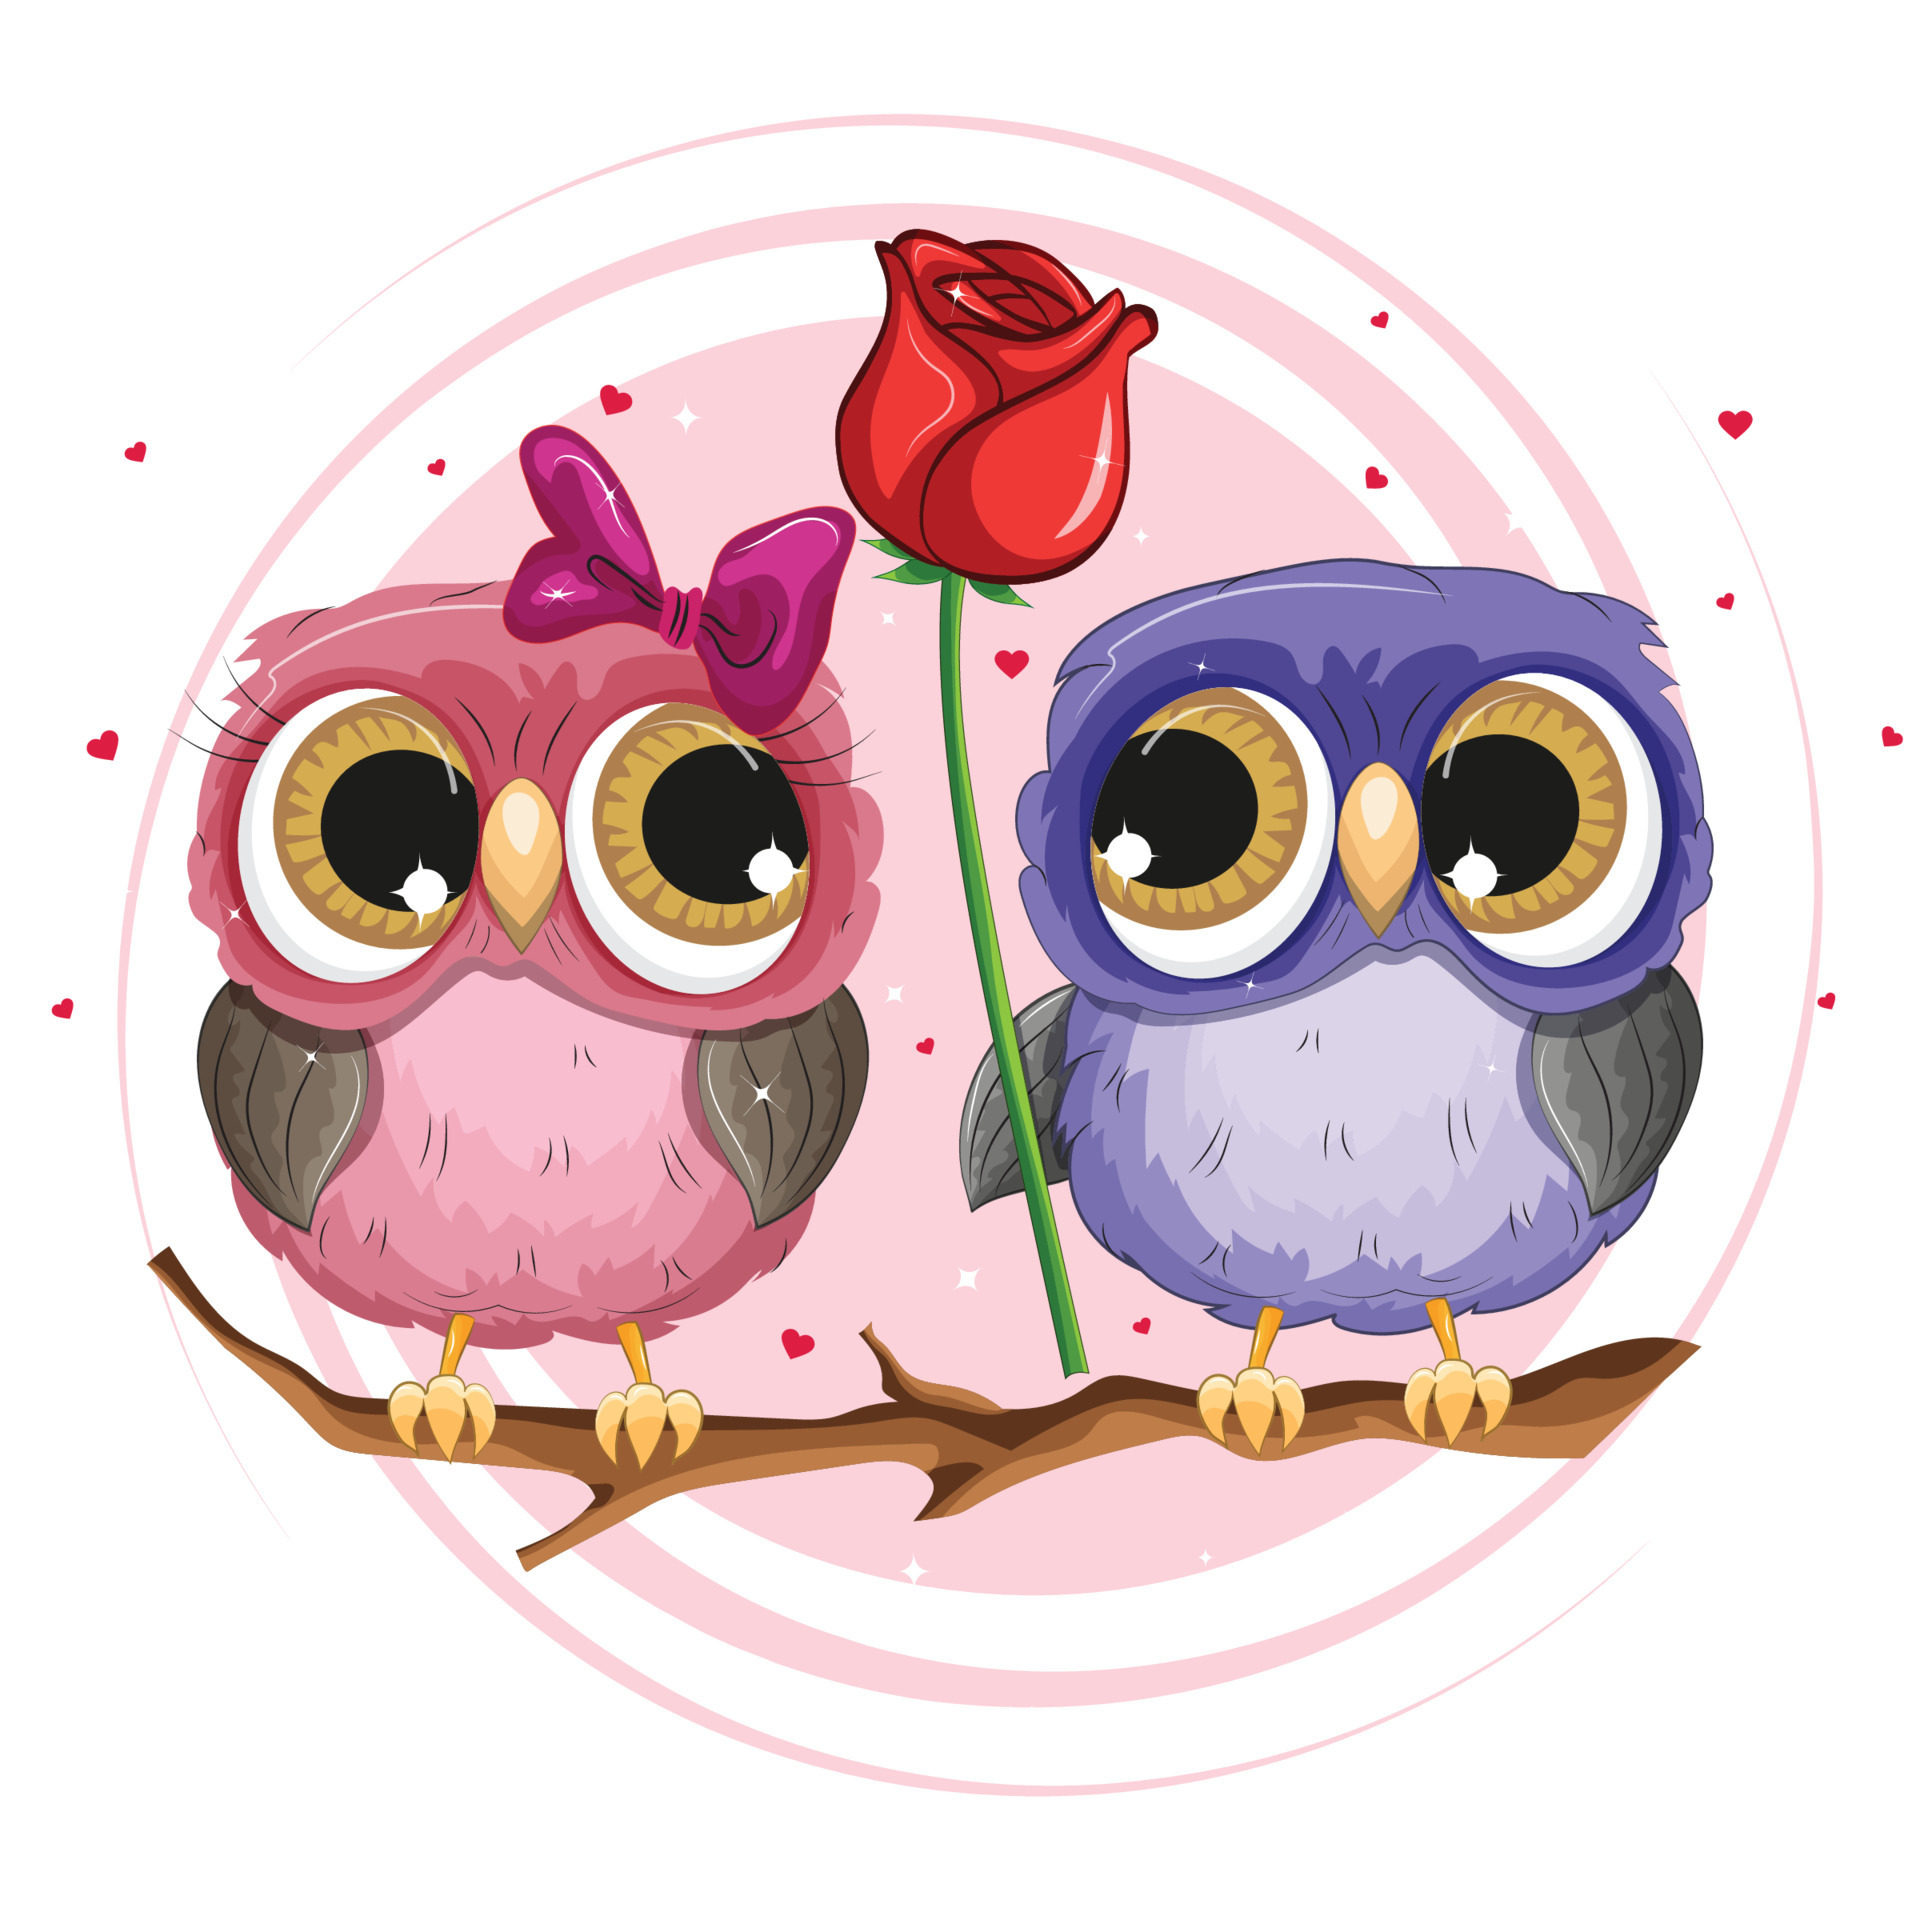 Cute funny cartoon owls sitting together vector illustration. 20240699  Vector Art at Vecteezy